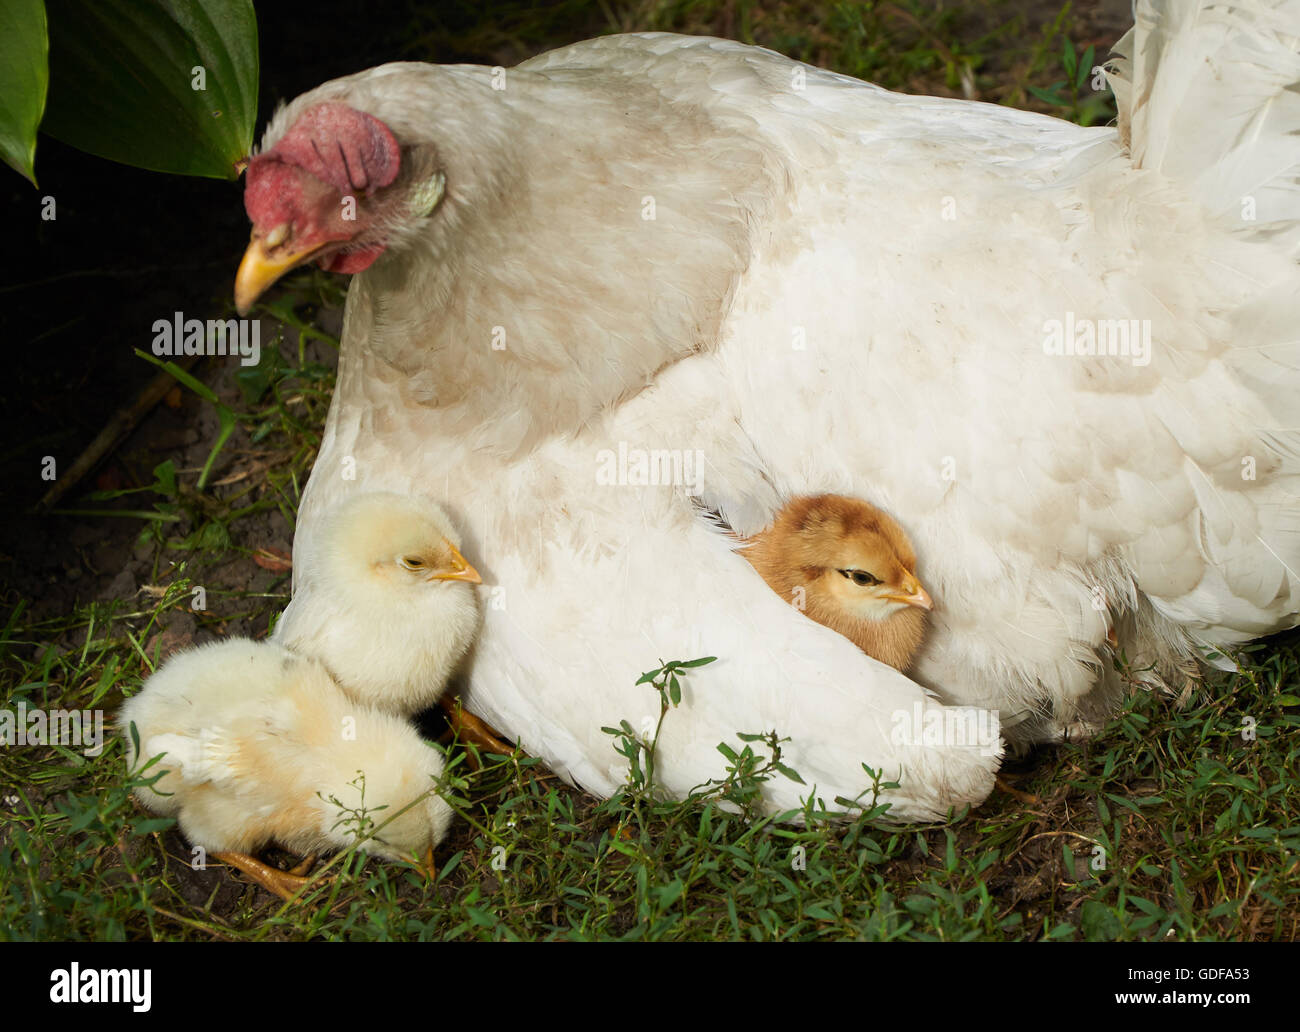 https://c8.alamy.com/comp/GDFA53/little-chicks-near-the-hen-and-under-its-wing-GDFA53.jpg